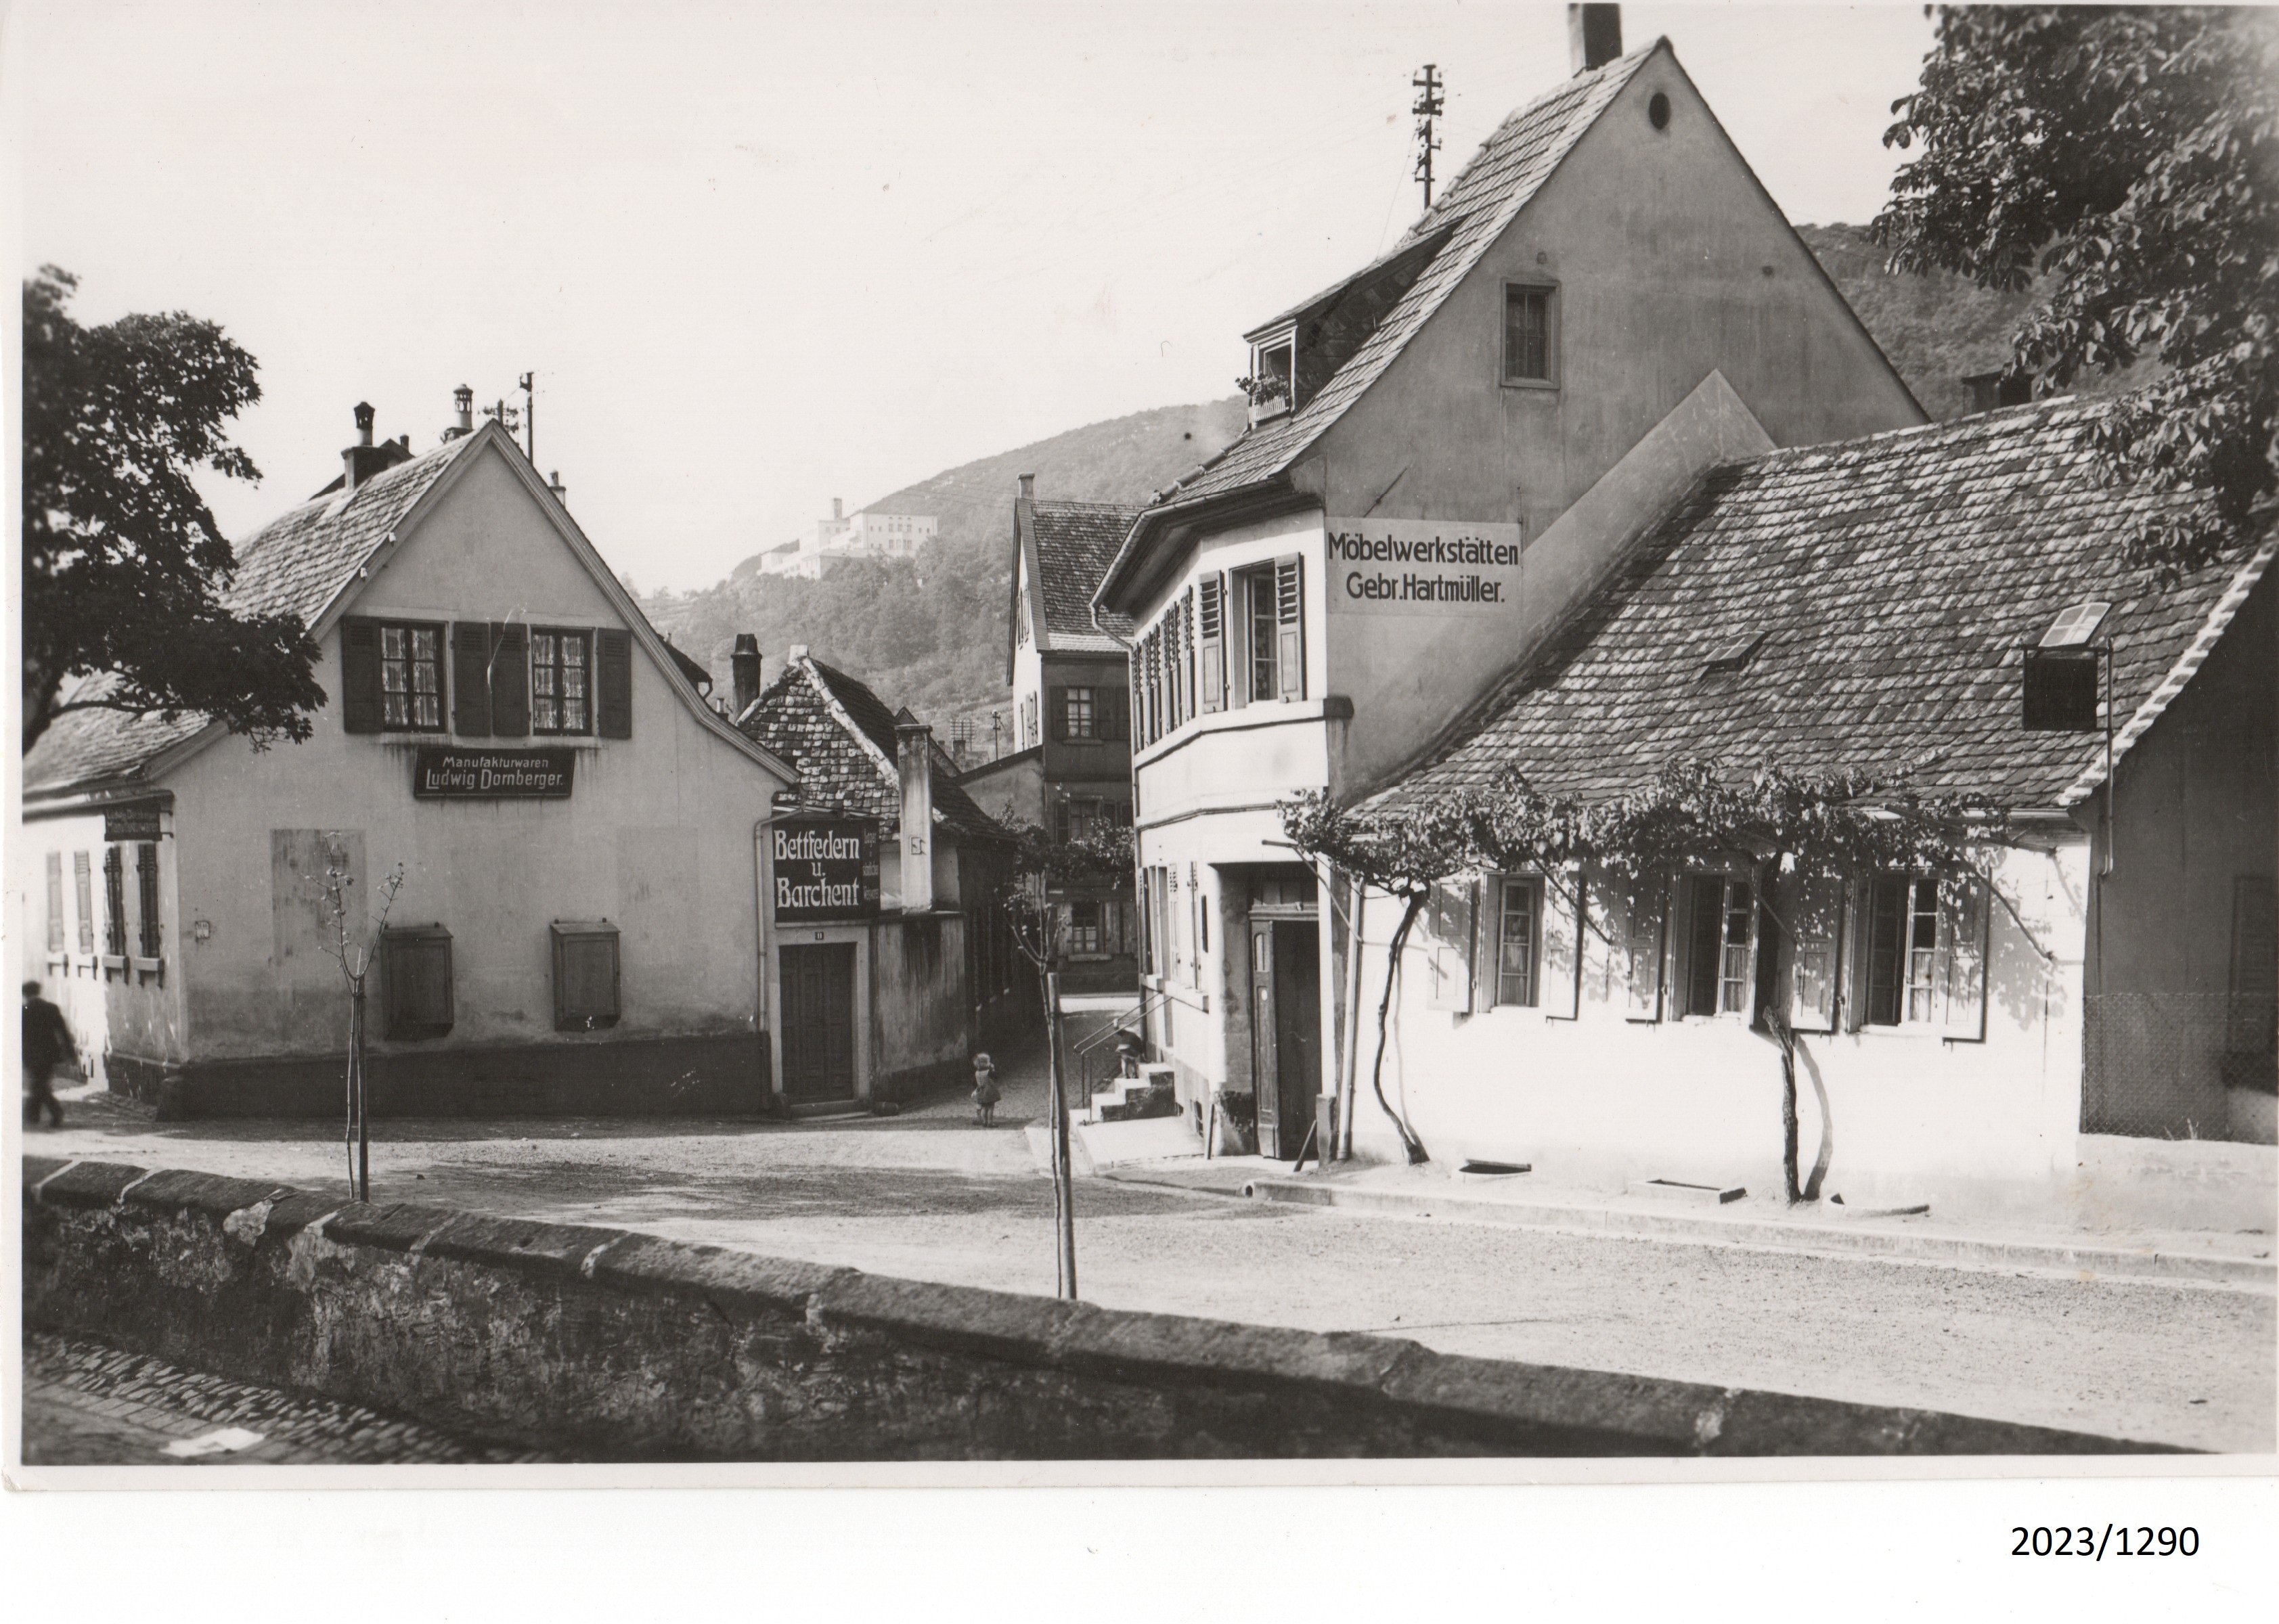 Bad Dürkheim, Teil der Gerberstraße, 1930er Jahre (Stadtmuseum Bad Dürkheim im Kulturzentrum Haus Catoir CC BY-NC-SA)